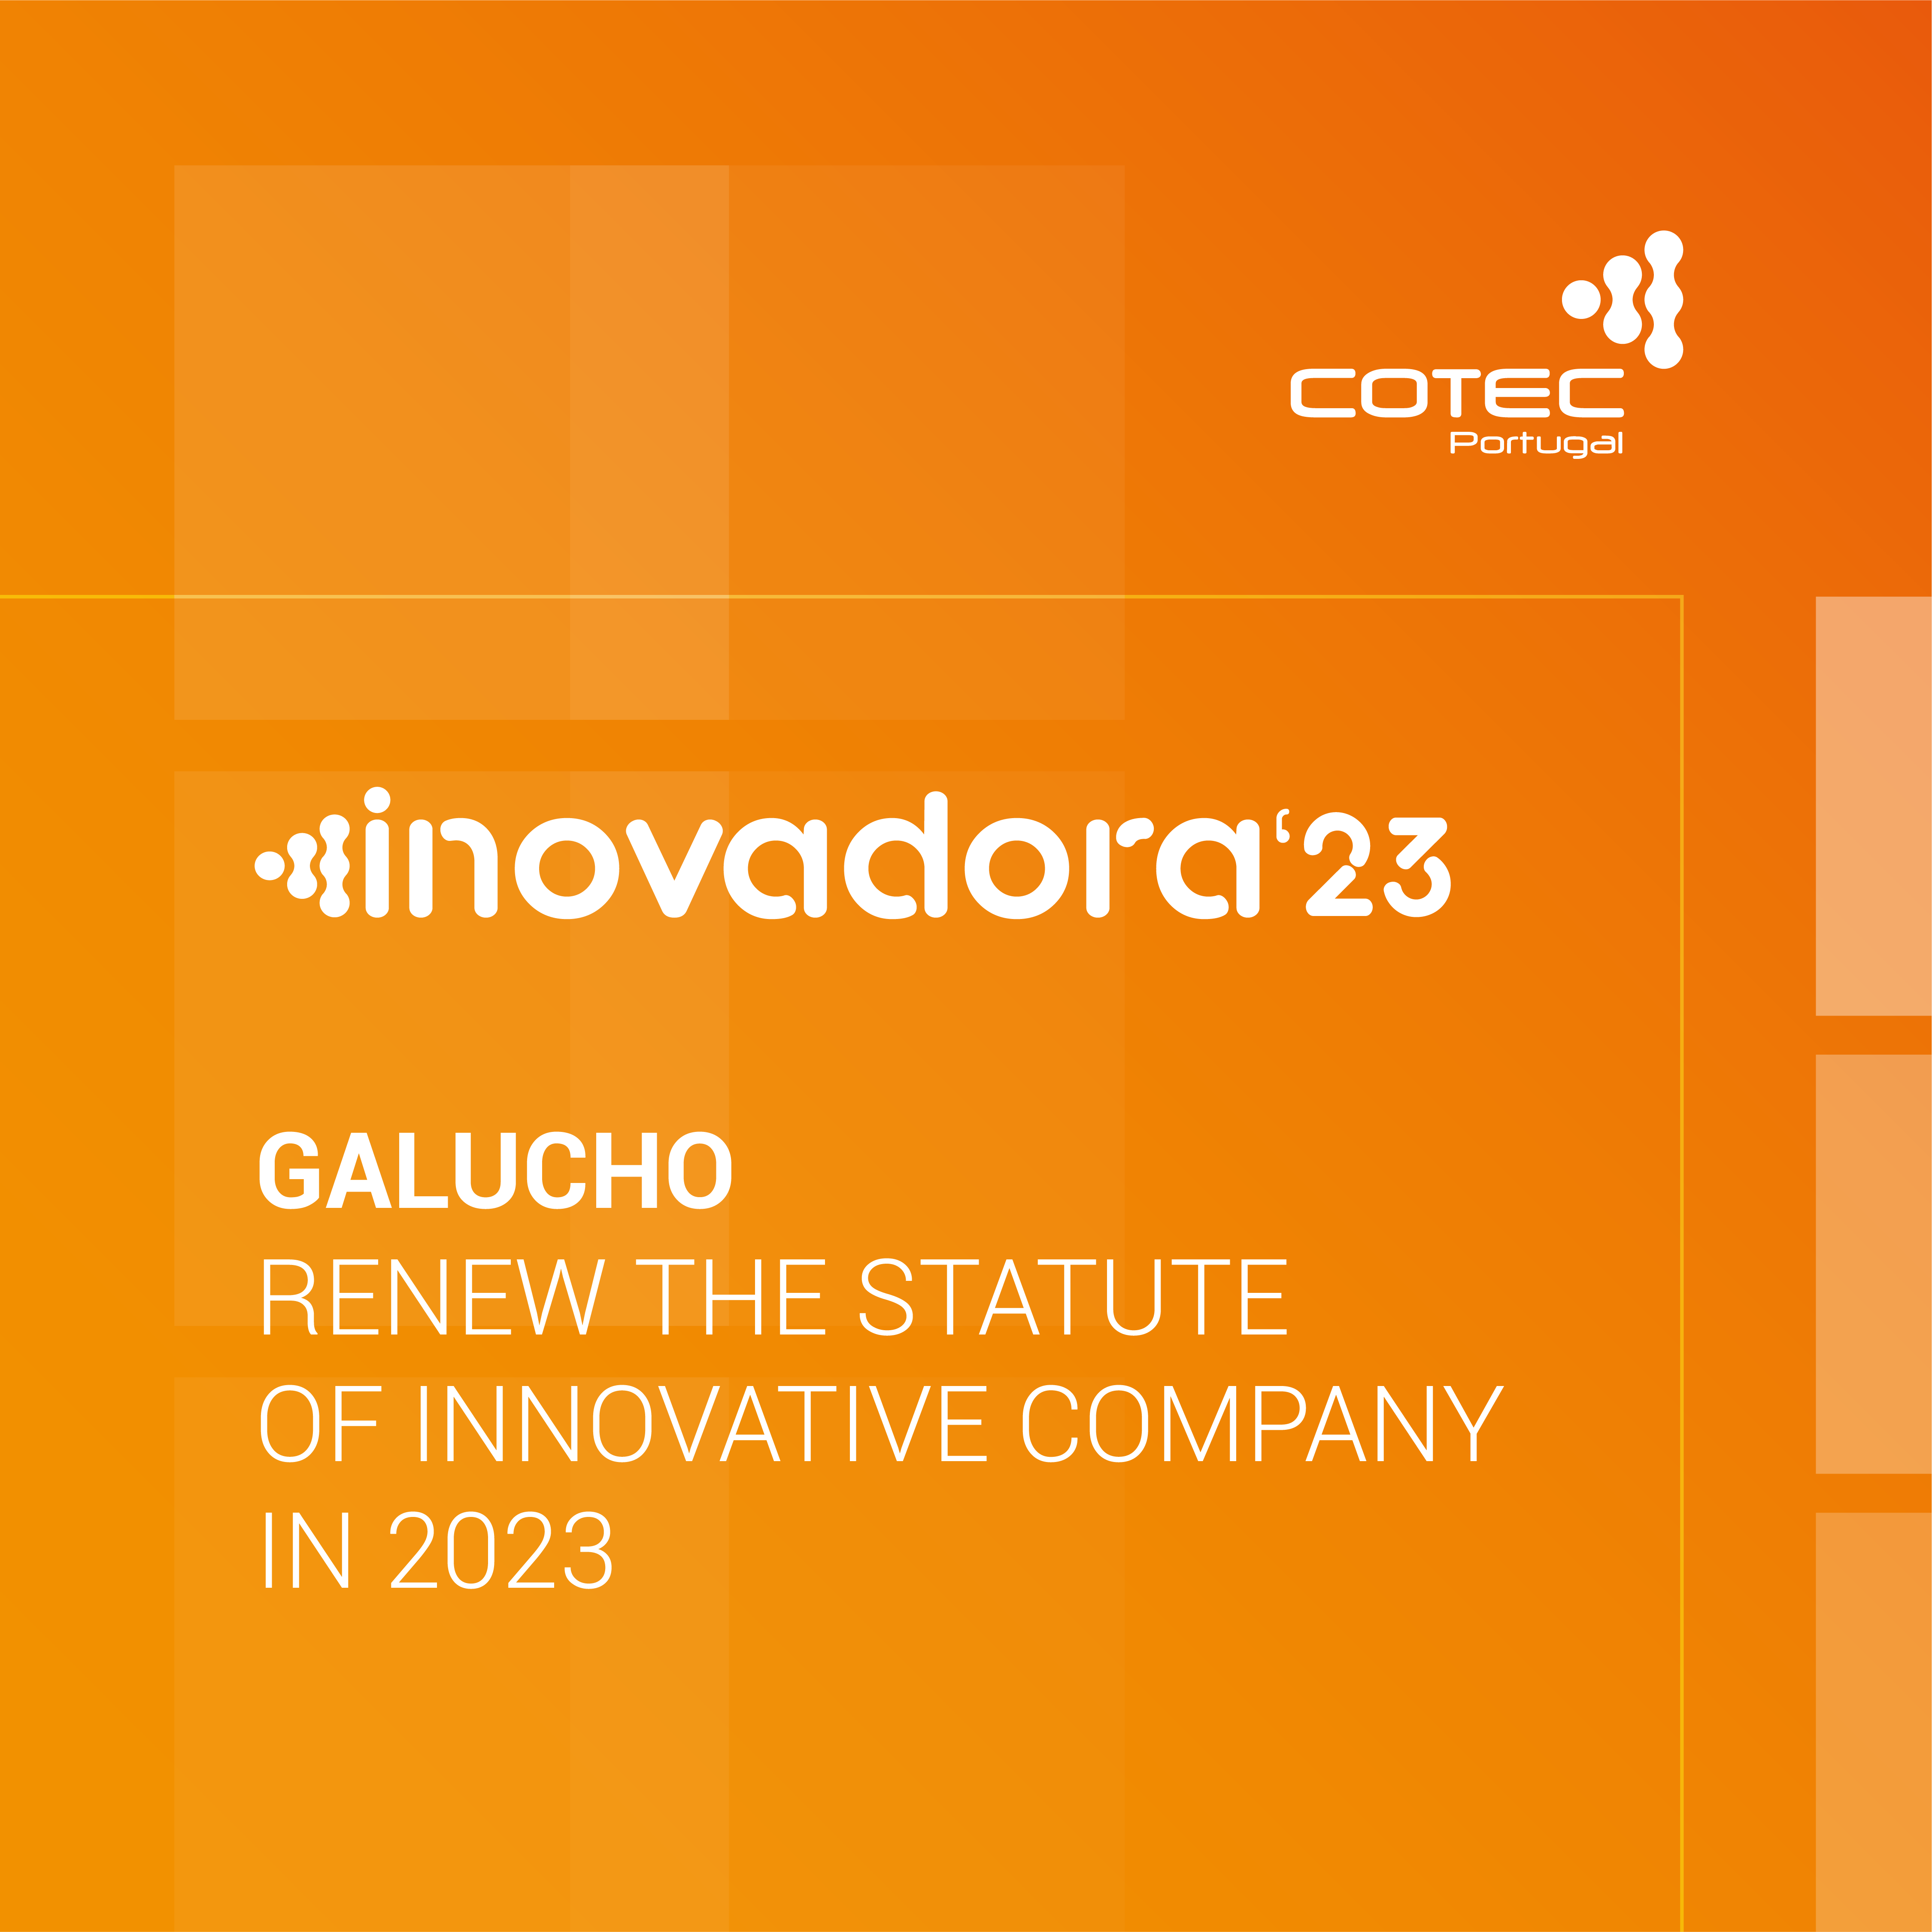 Galucho is INNOVATIVE COTEC 2023